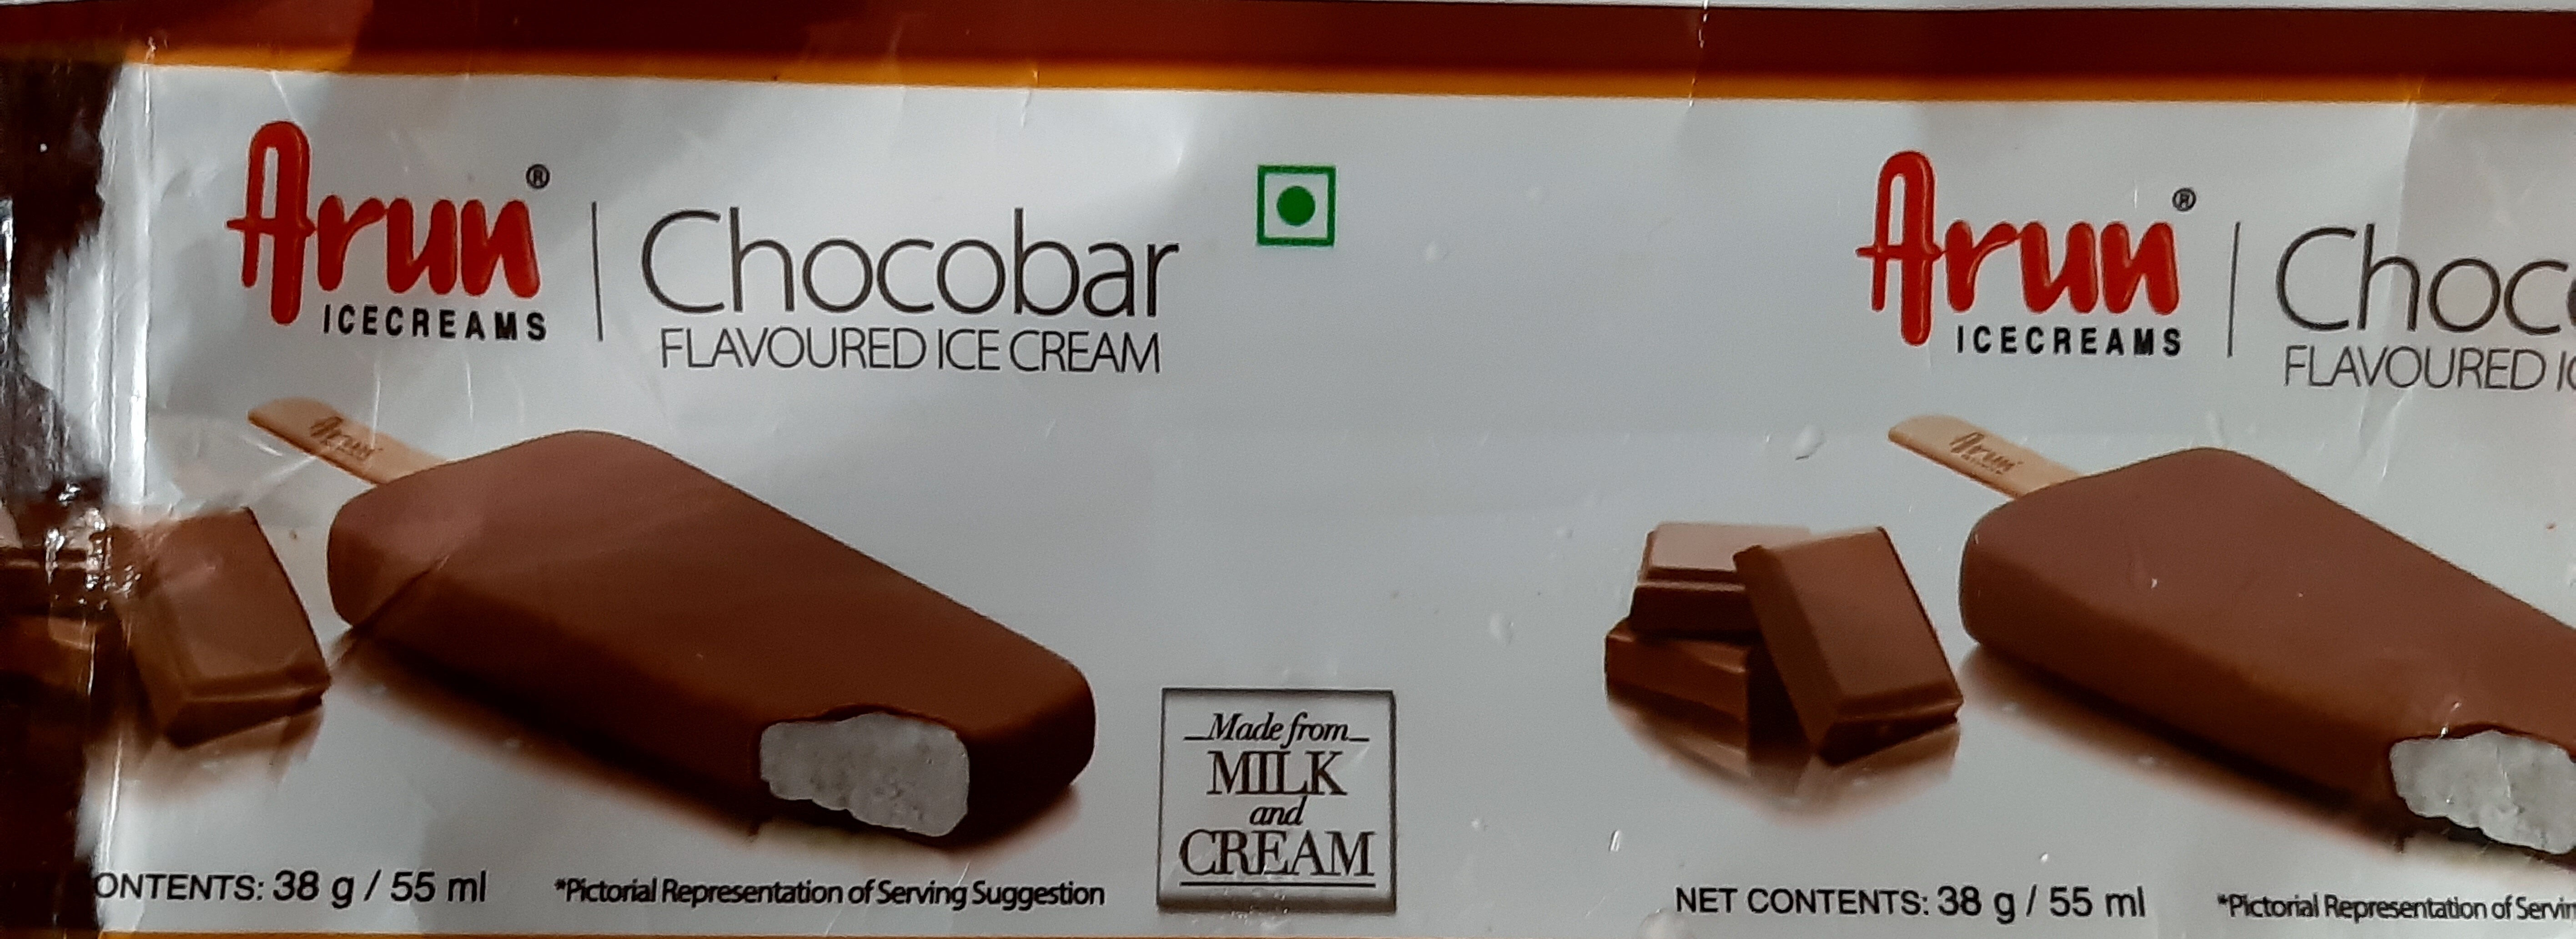 Chocobar - Product